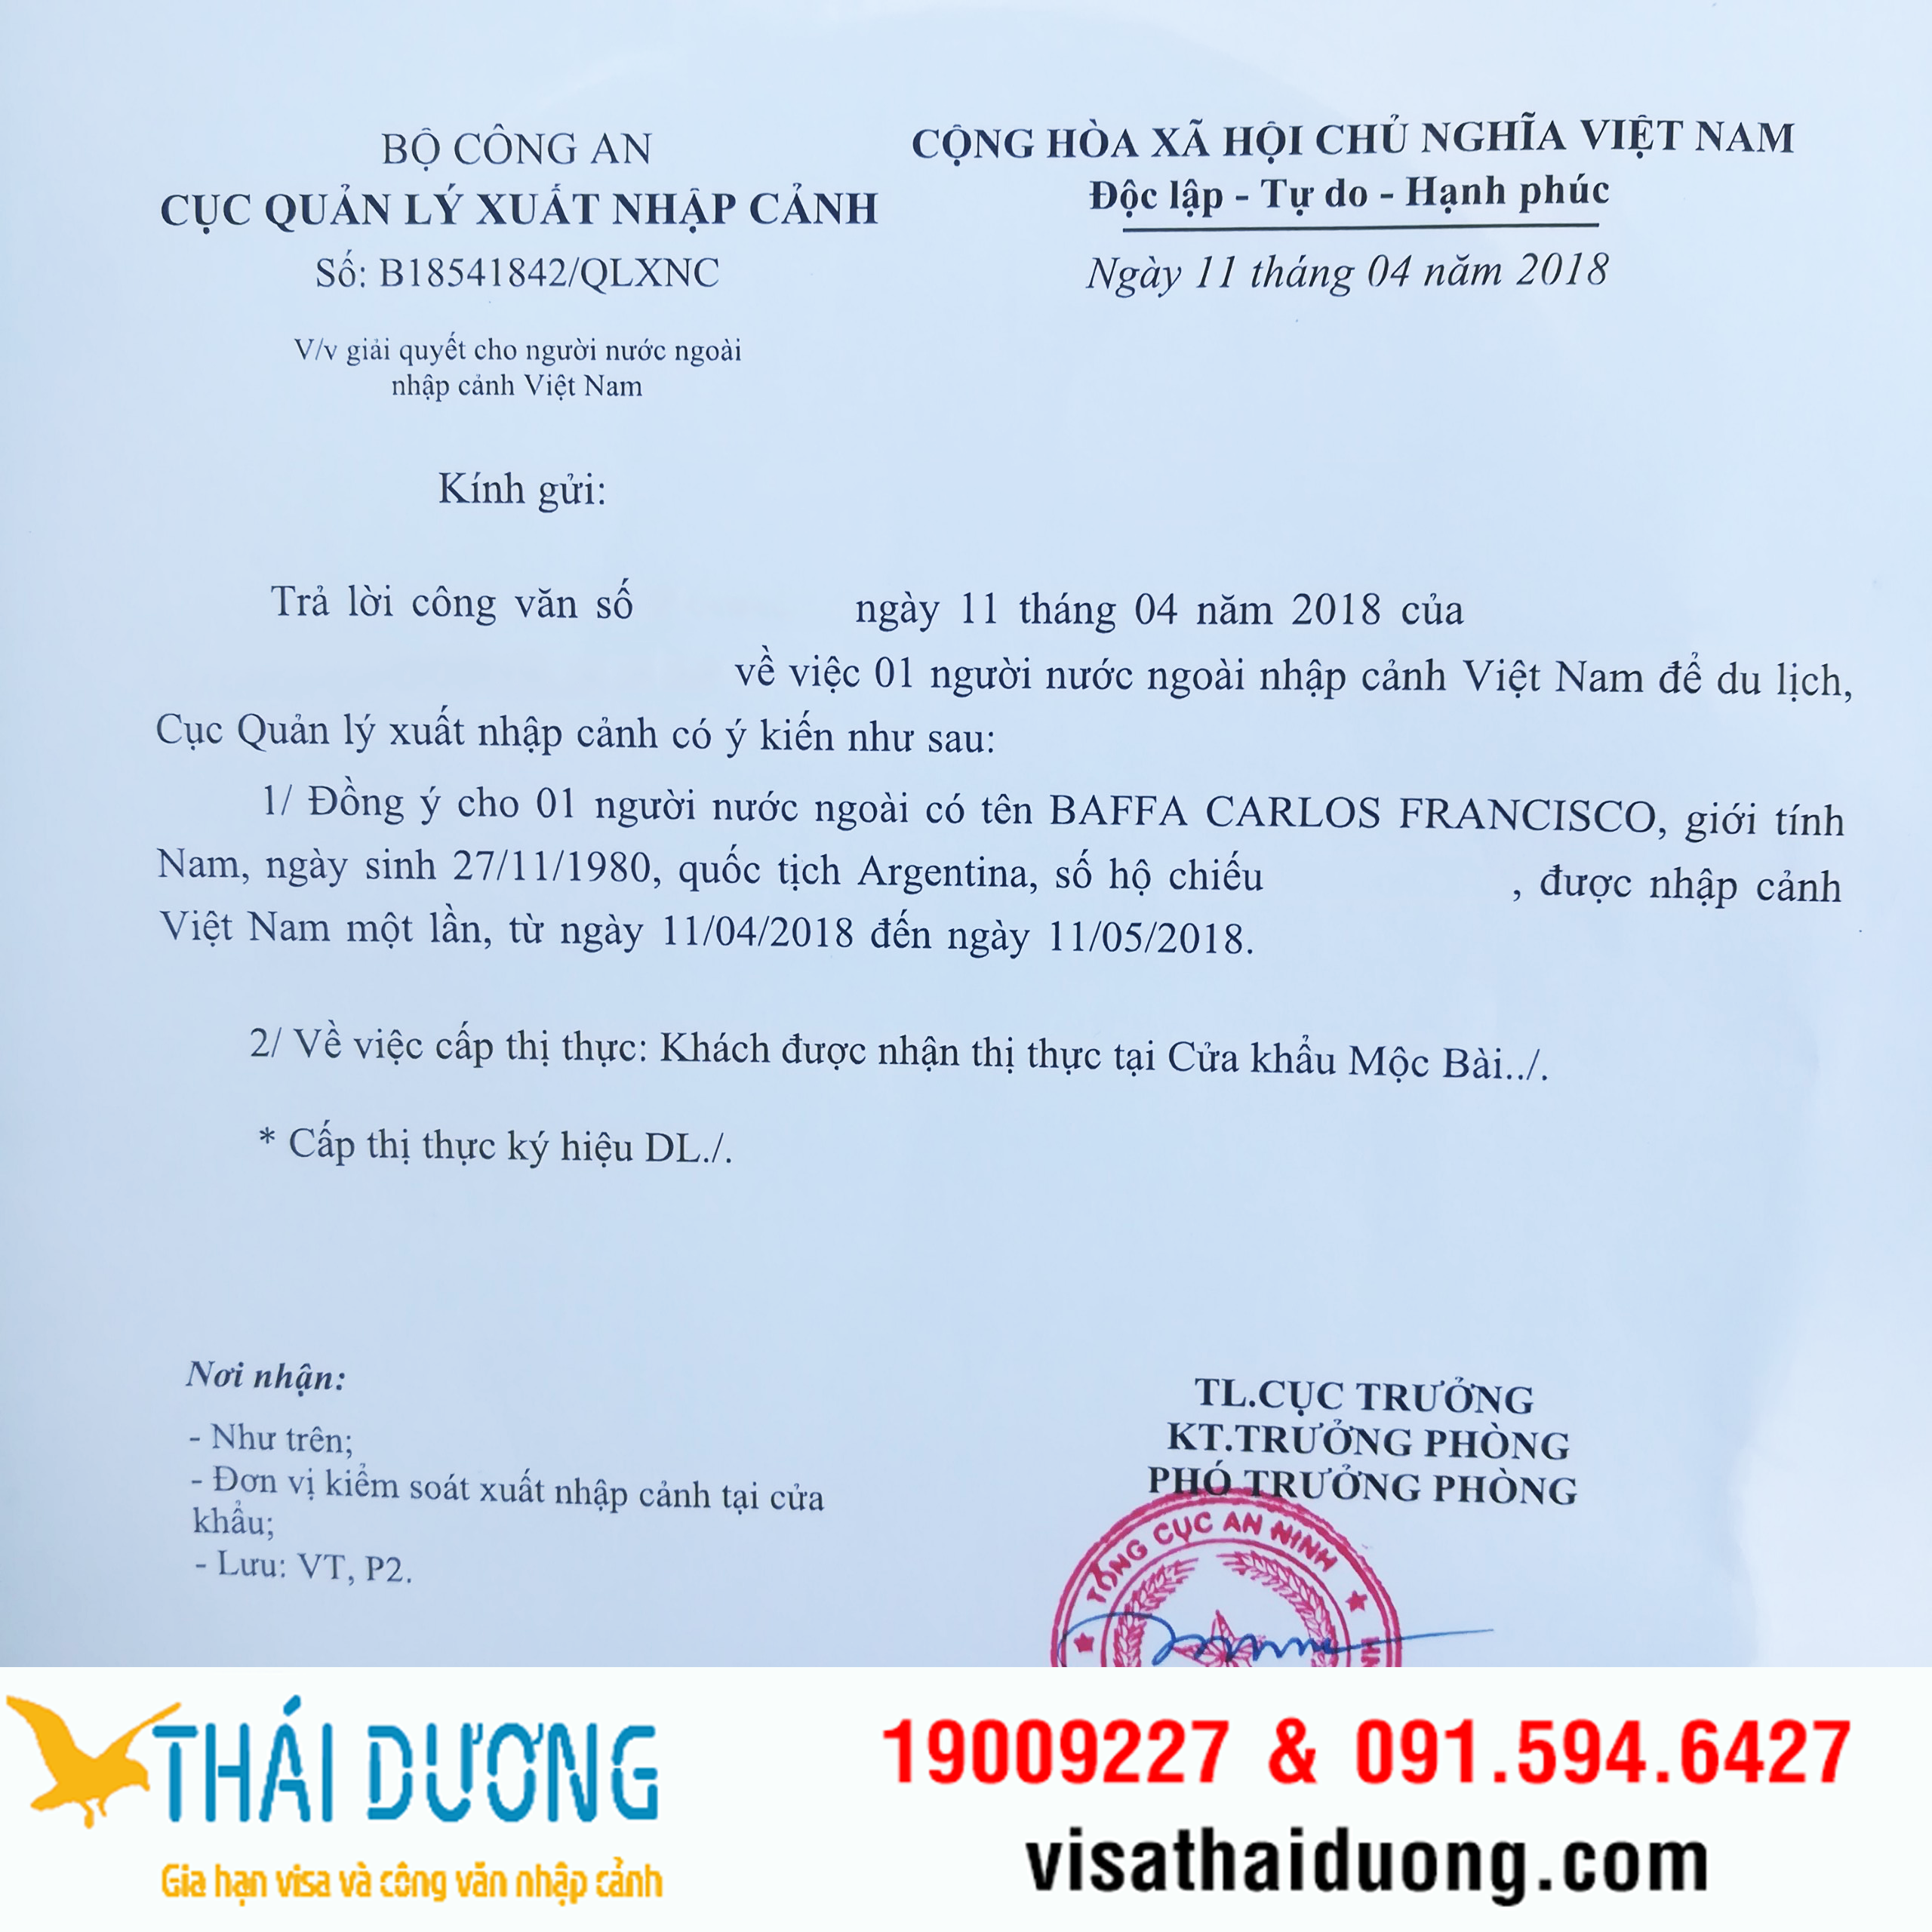 Vietnam Visa On Arrival in Sai Gon